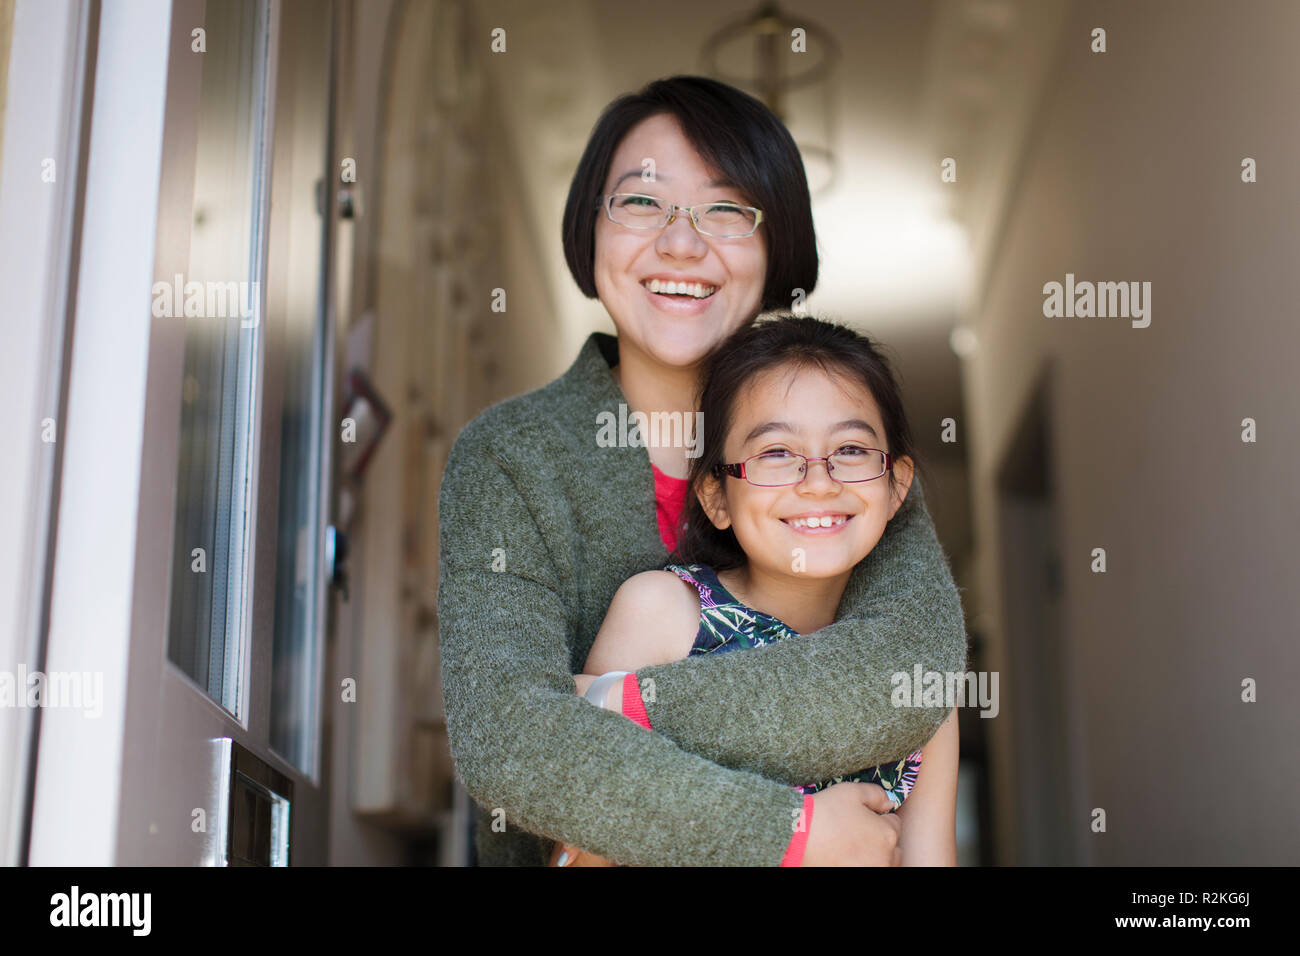 Portrait happy, affectionate mother and daughter hugging in doorway Stock Photo